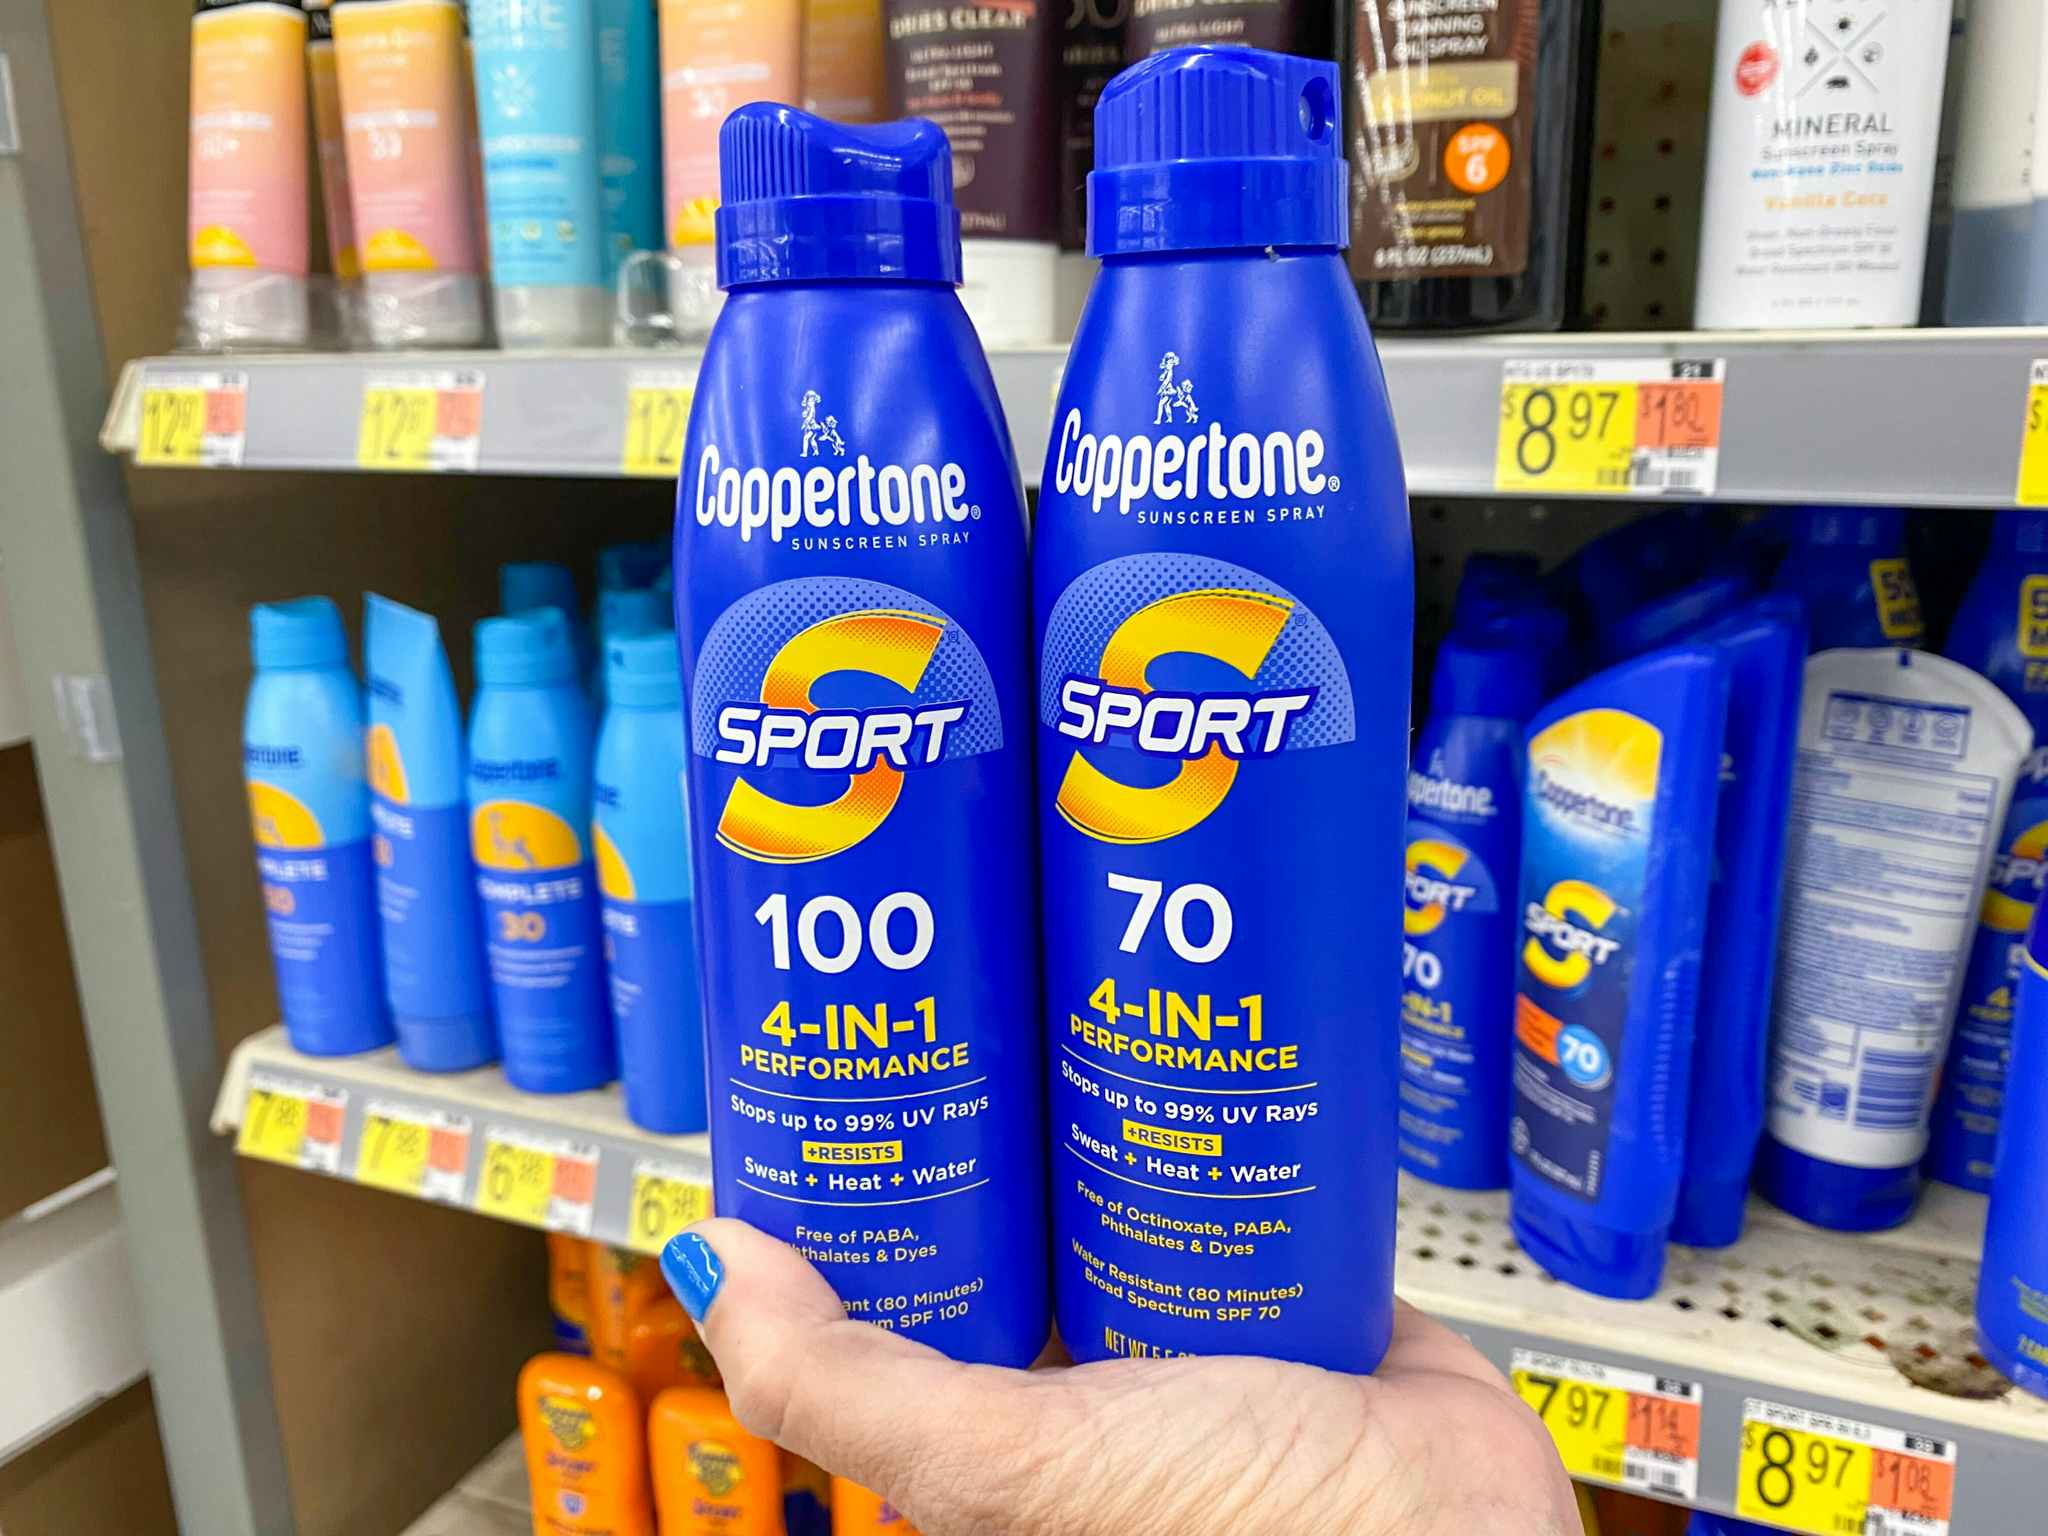 Coppertone Sport Sunscreen at Walmart